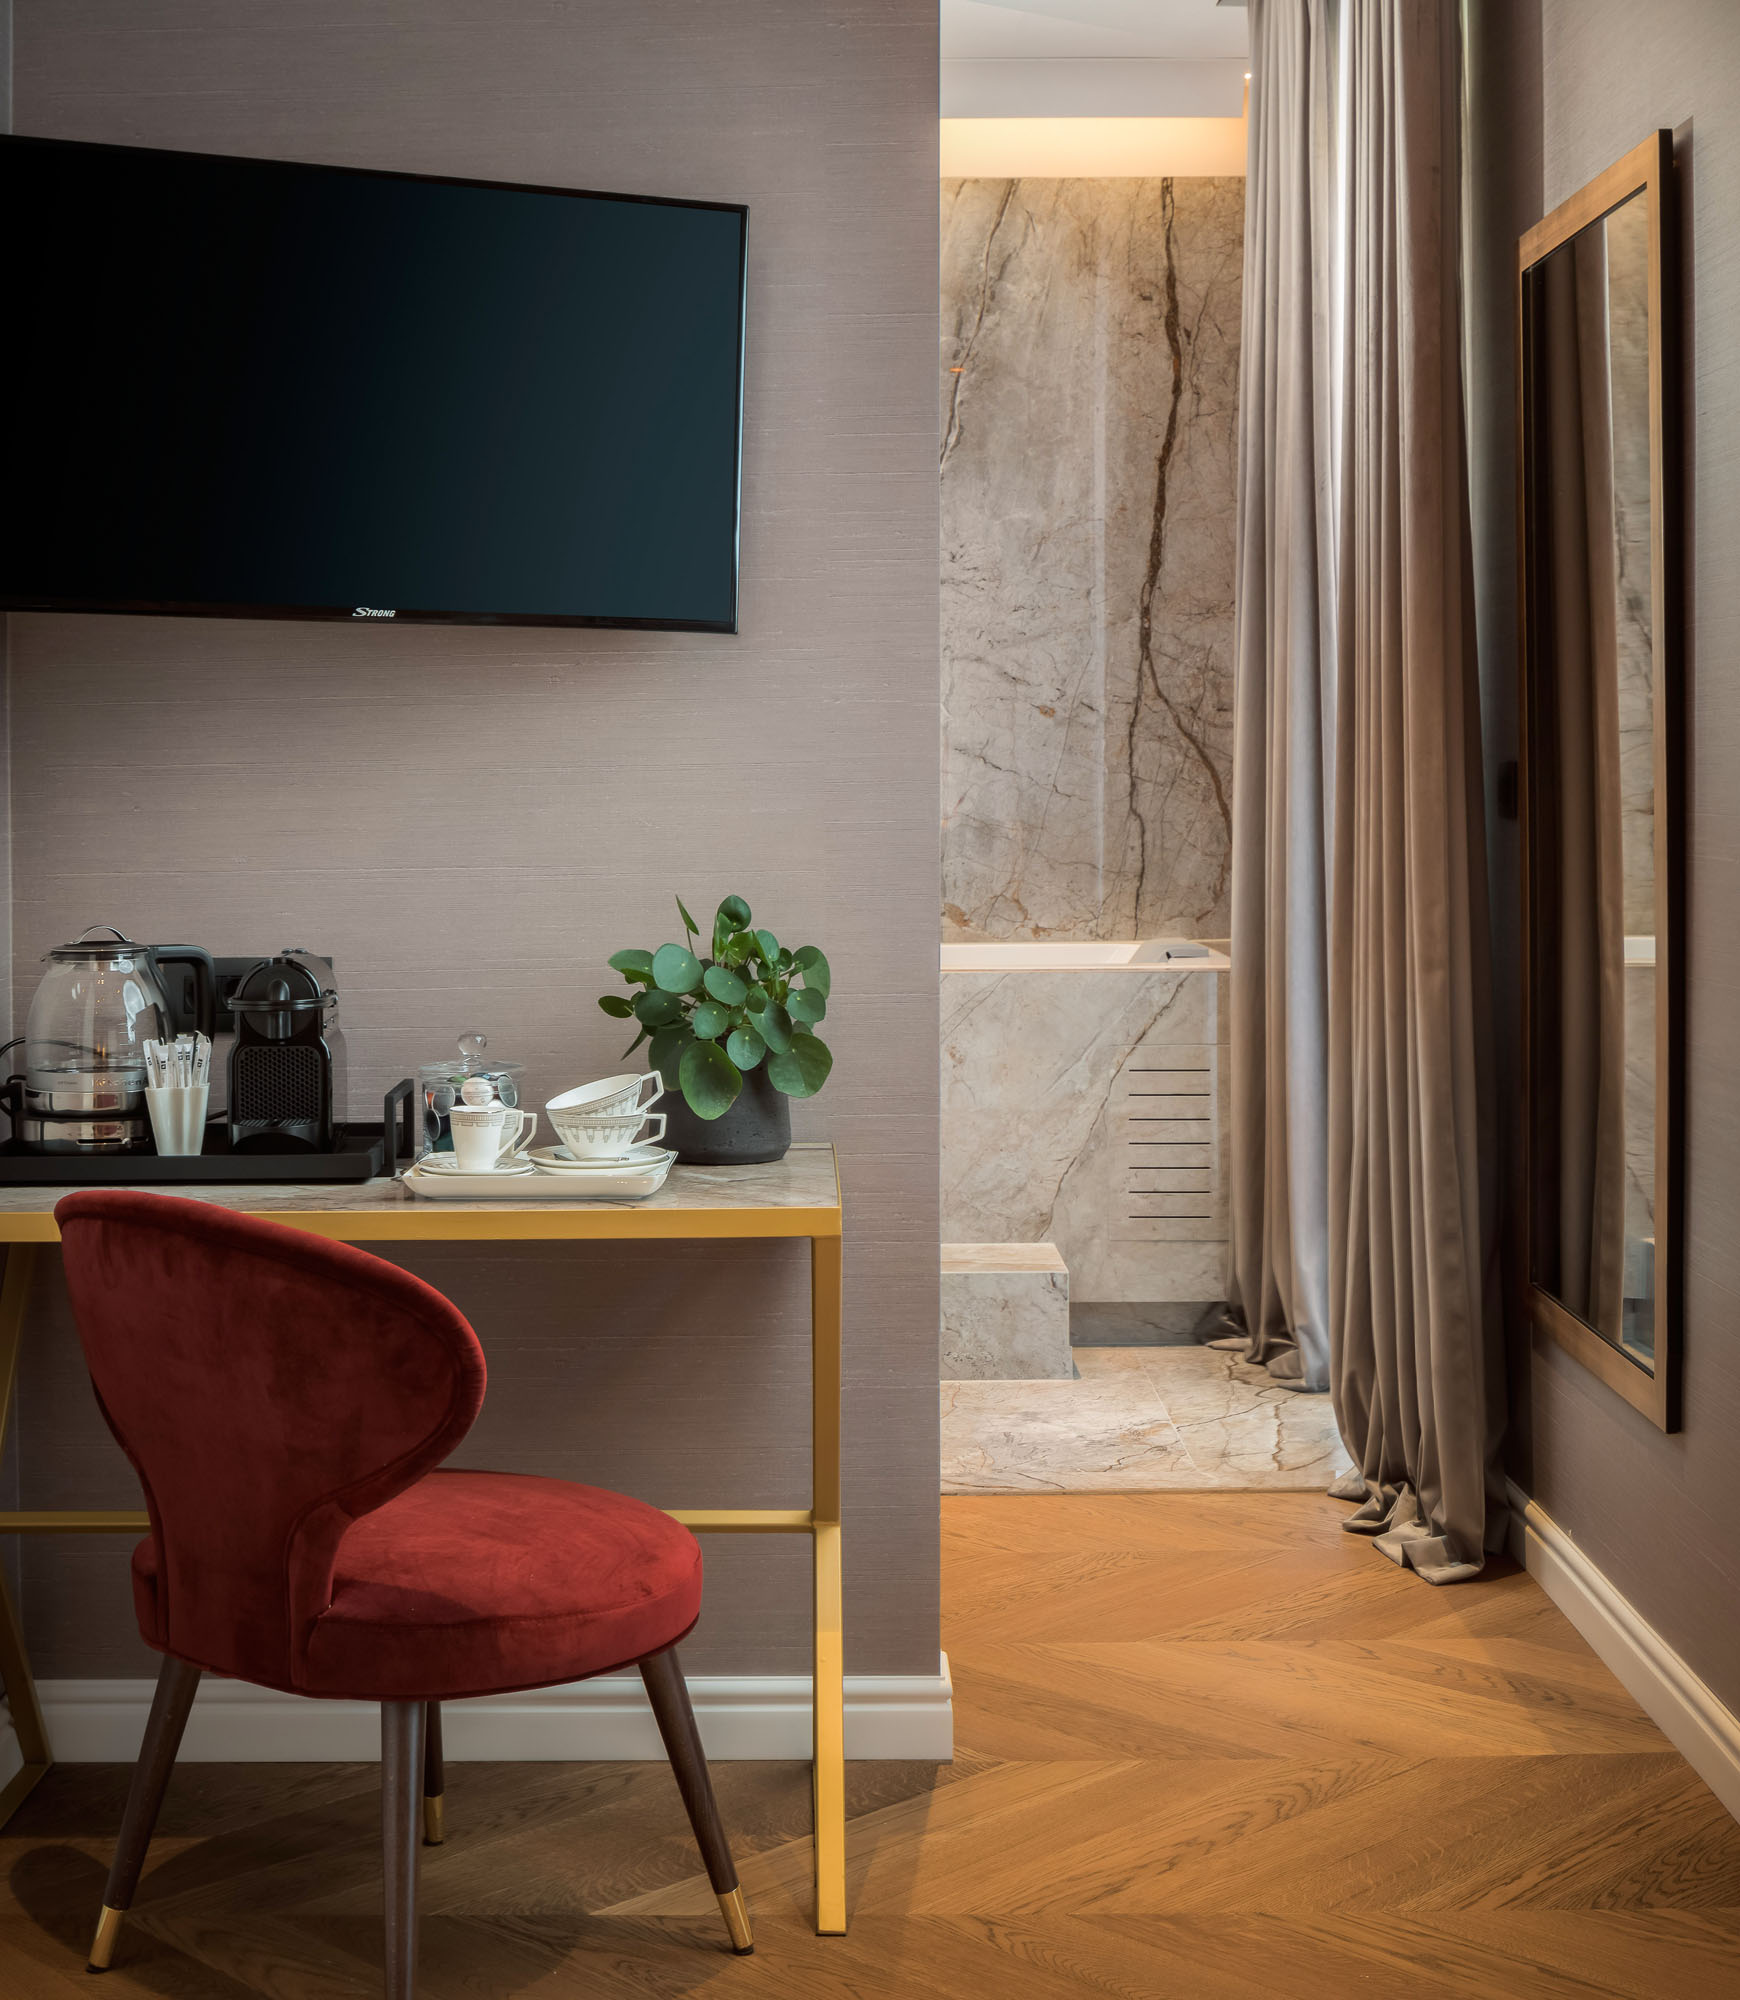 Five elements luxury rooms in Split